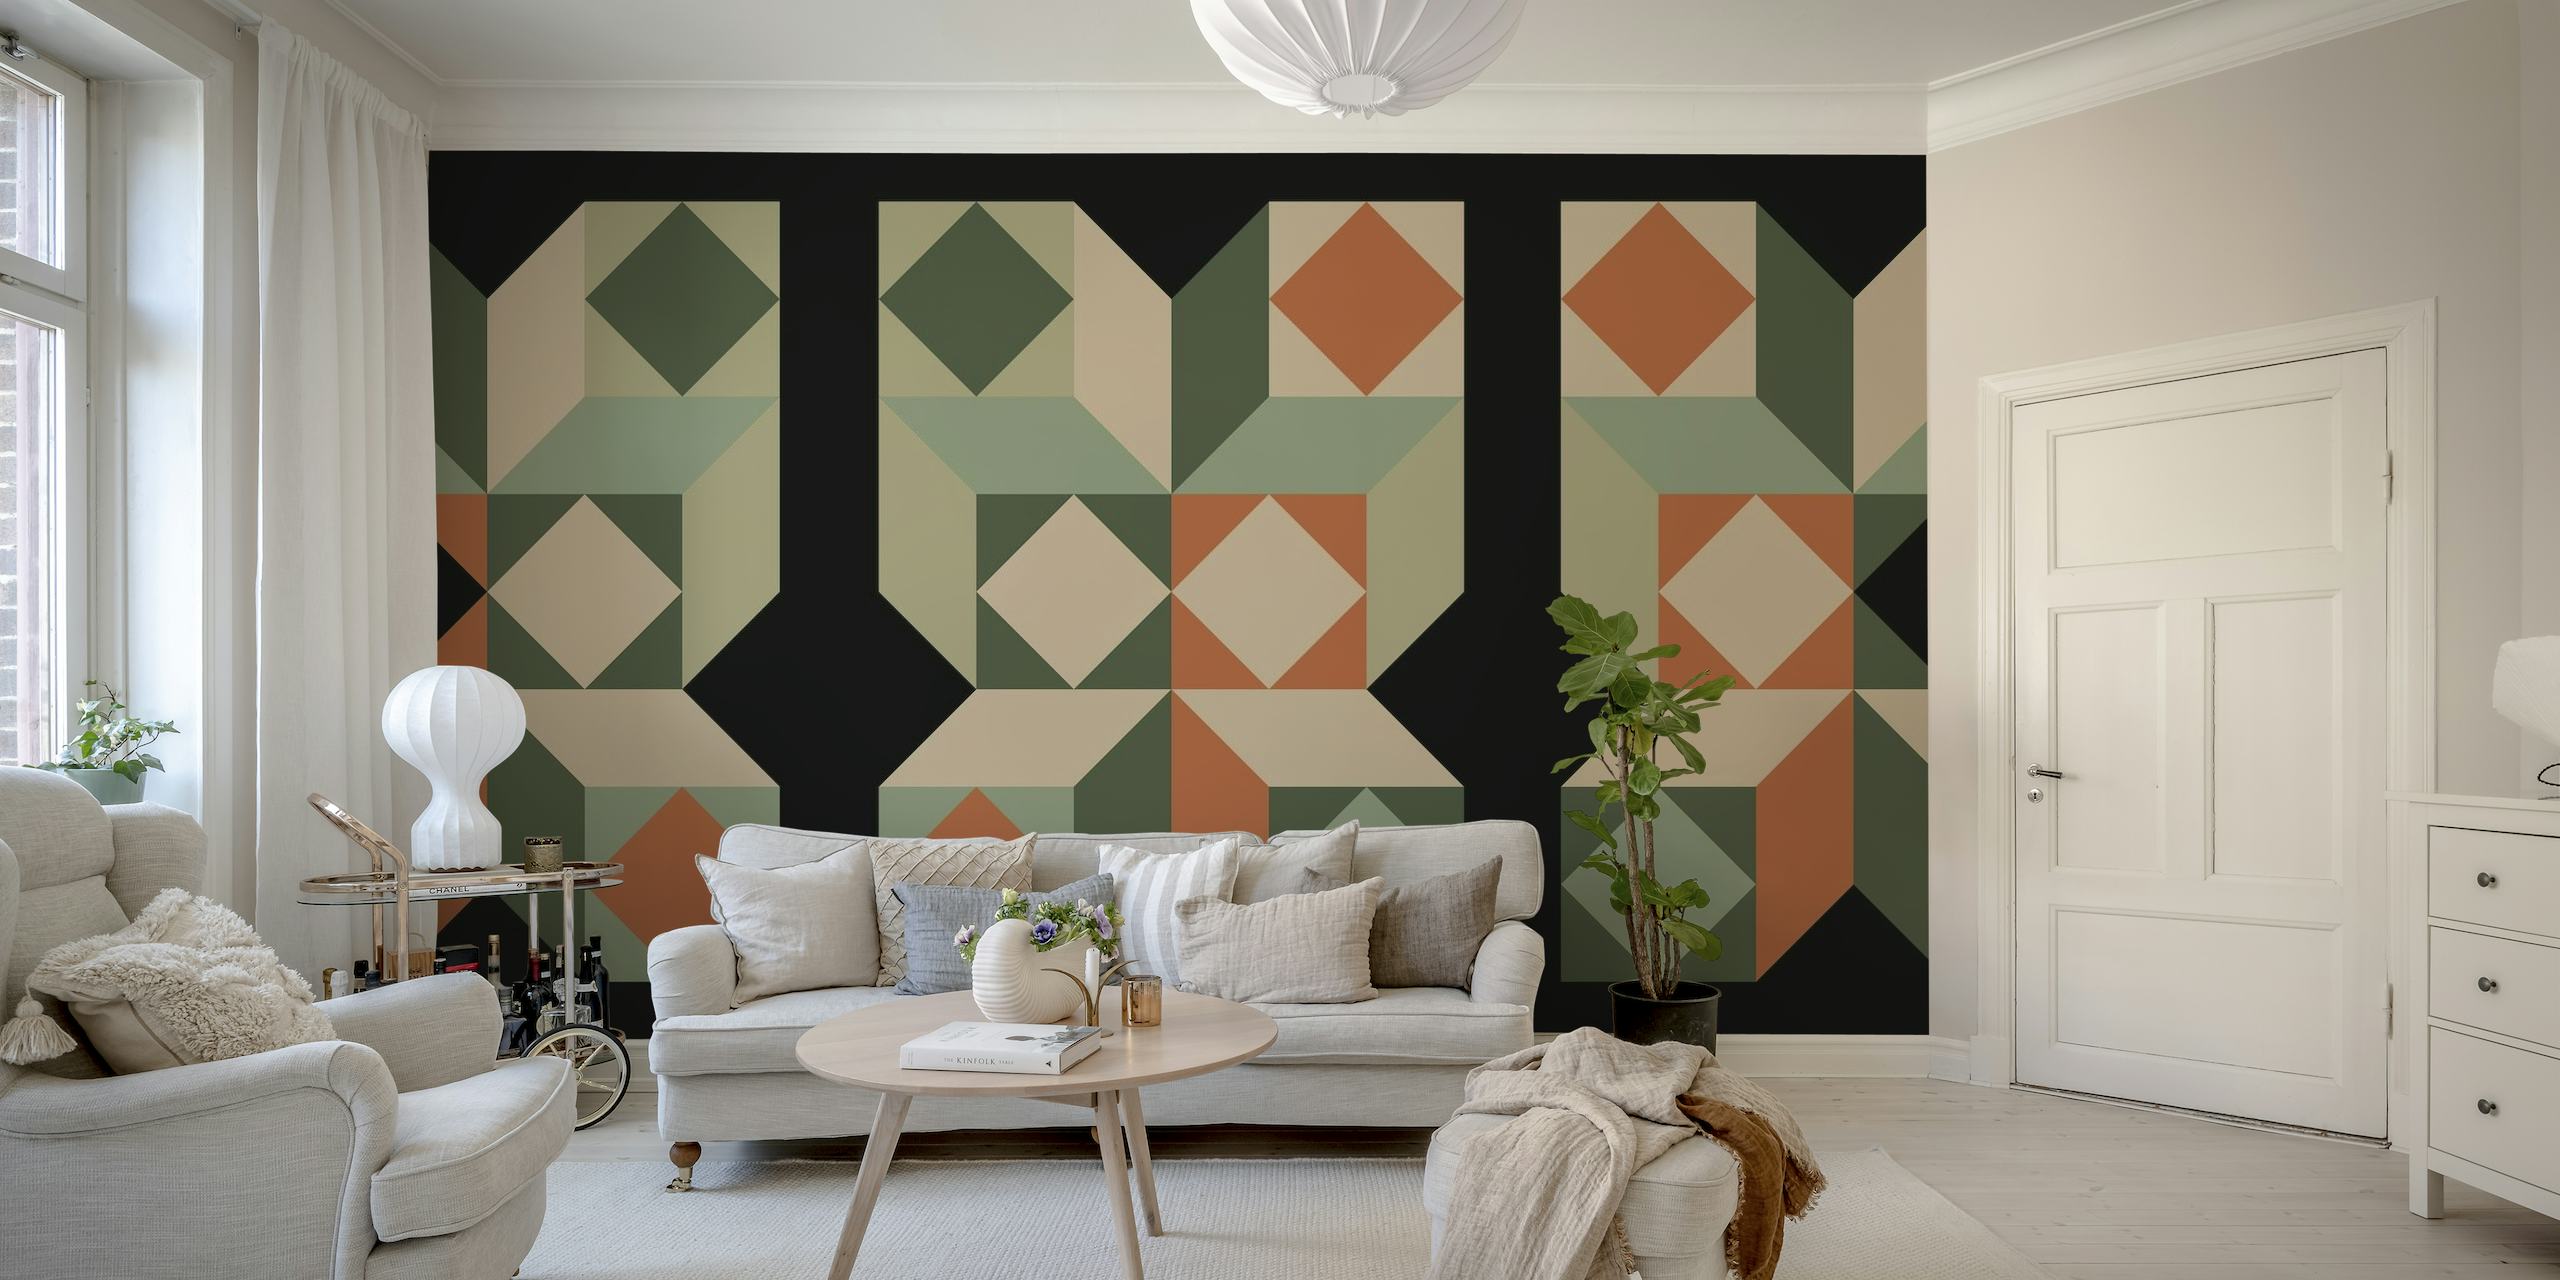 Midcentury Bauhaus-inspireret vægmaleri med geometriske mønstre i grønne, orange og neutrale toner.